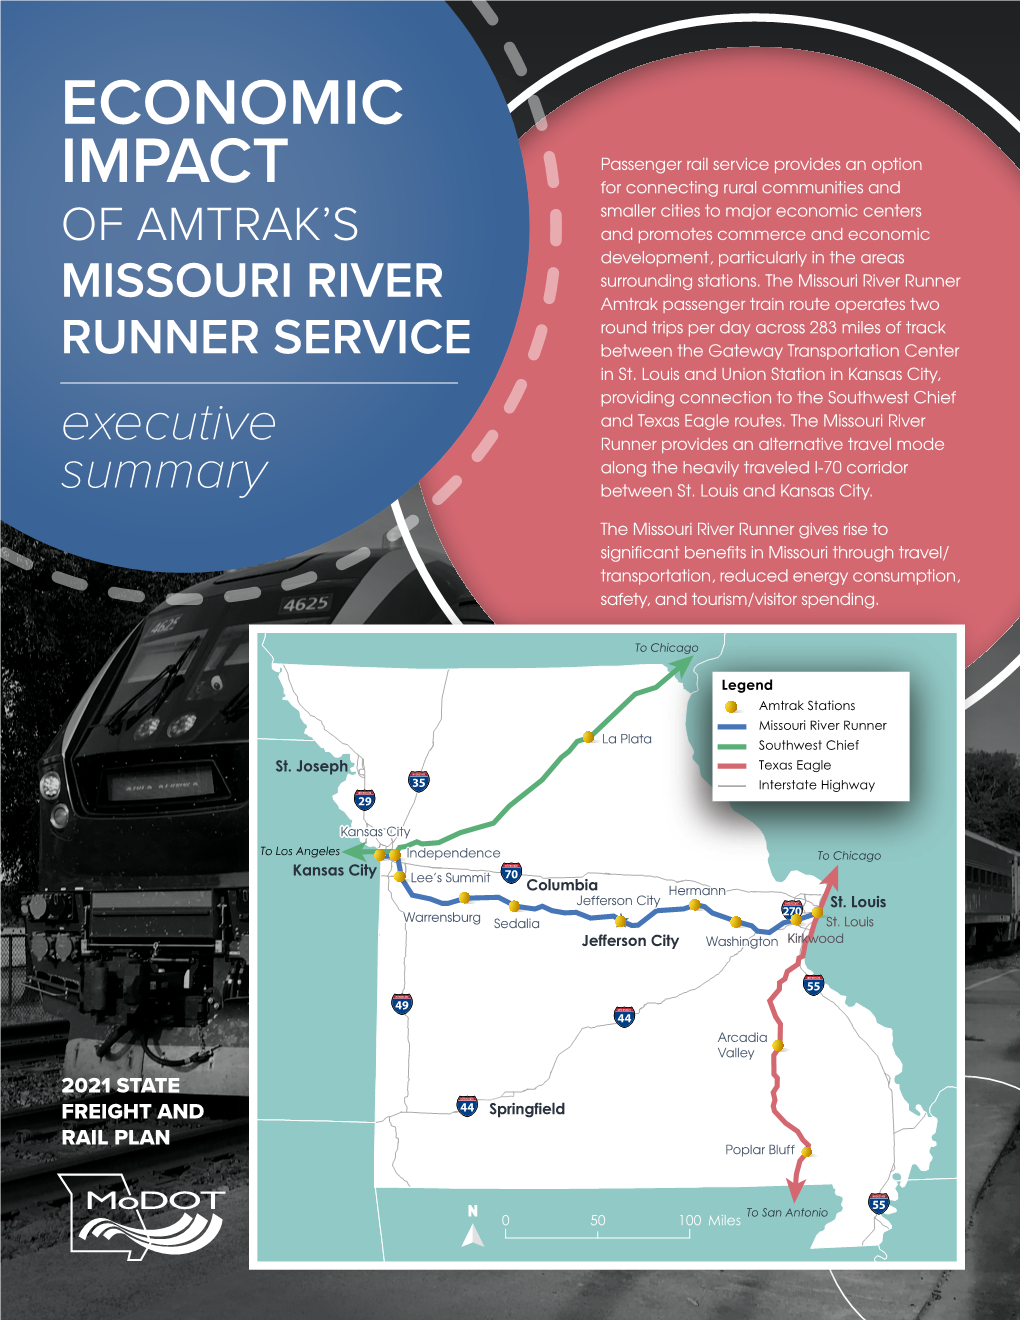 Economic Impact of Amtrak's Missouri River Runner Service in Missouri